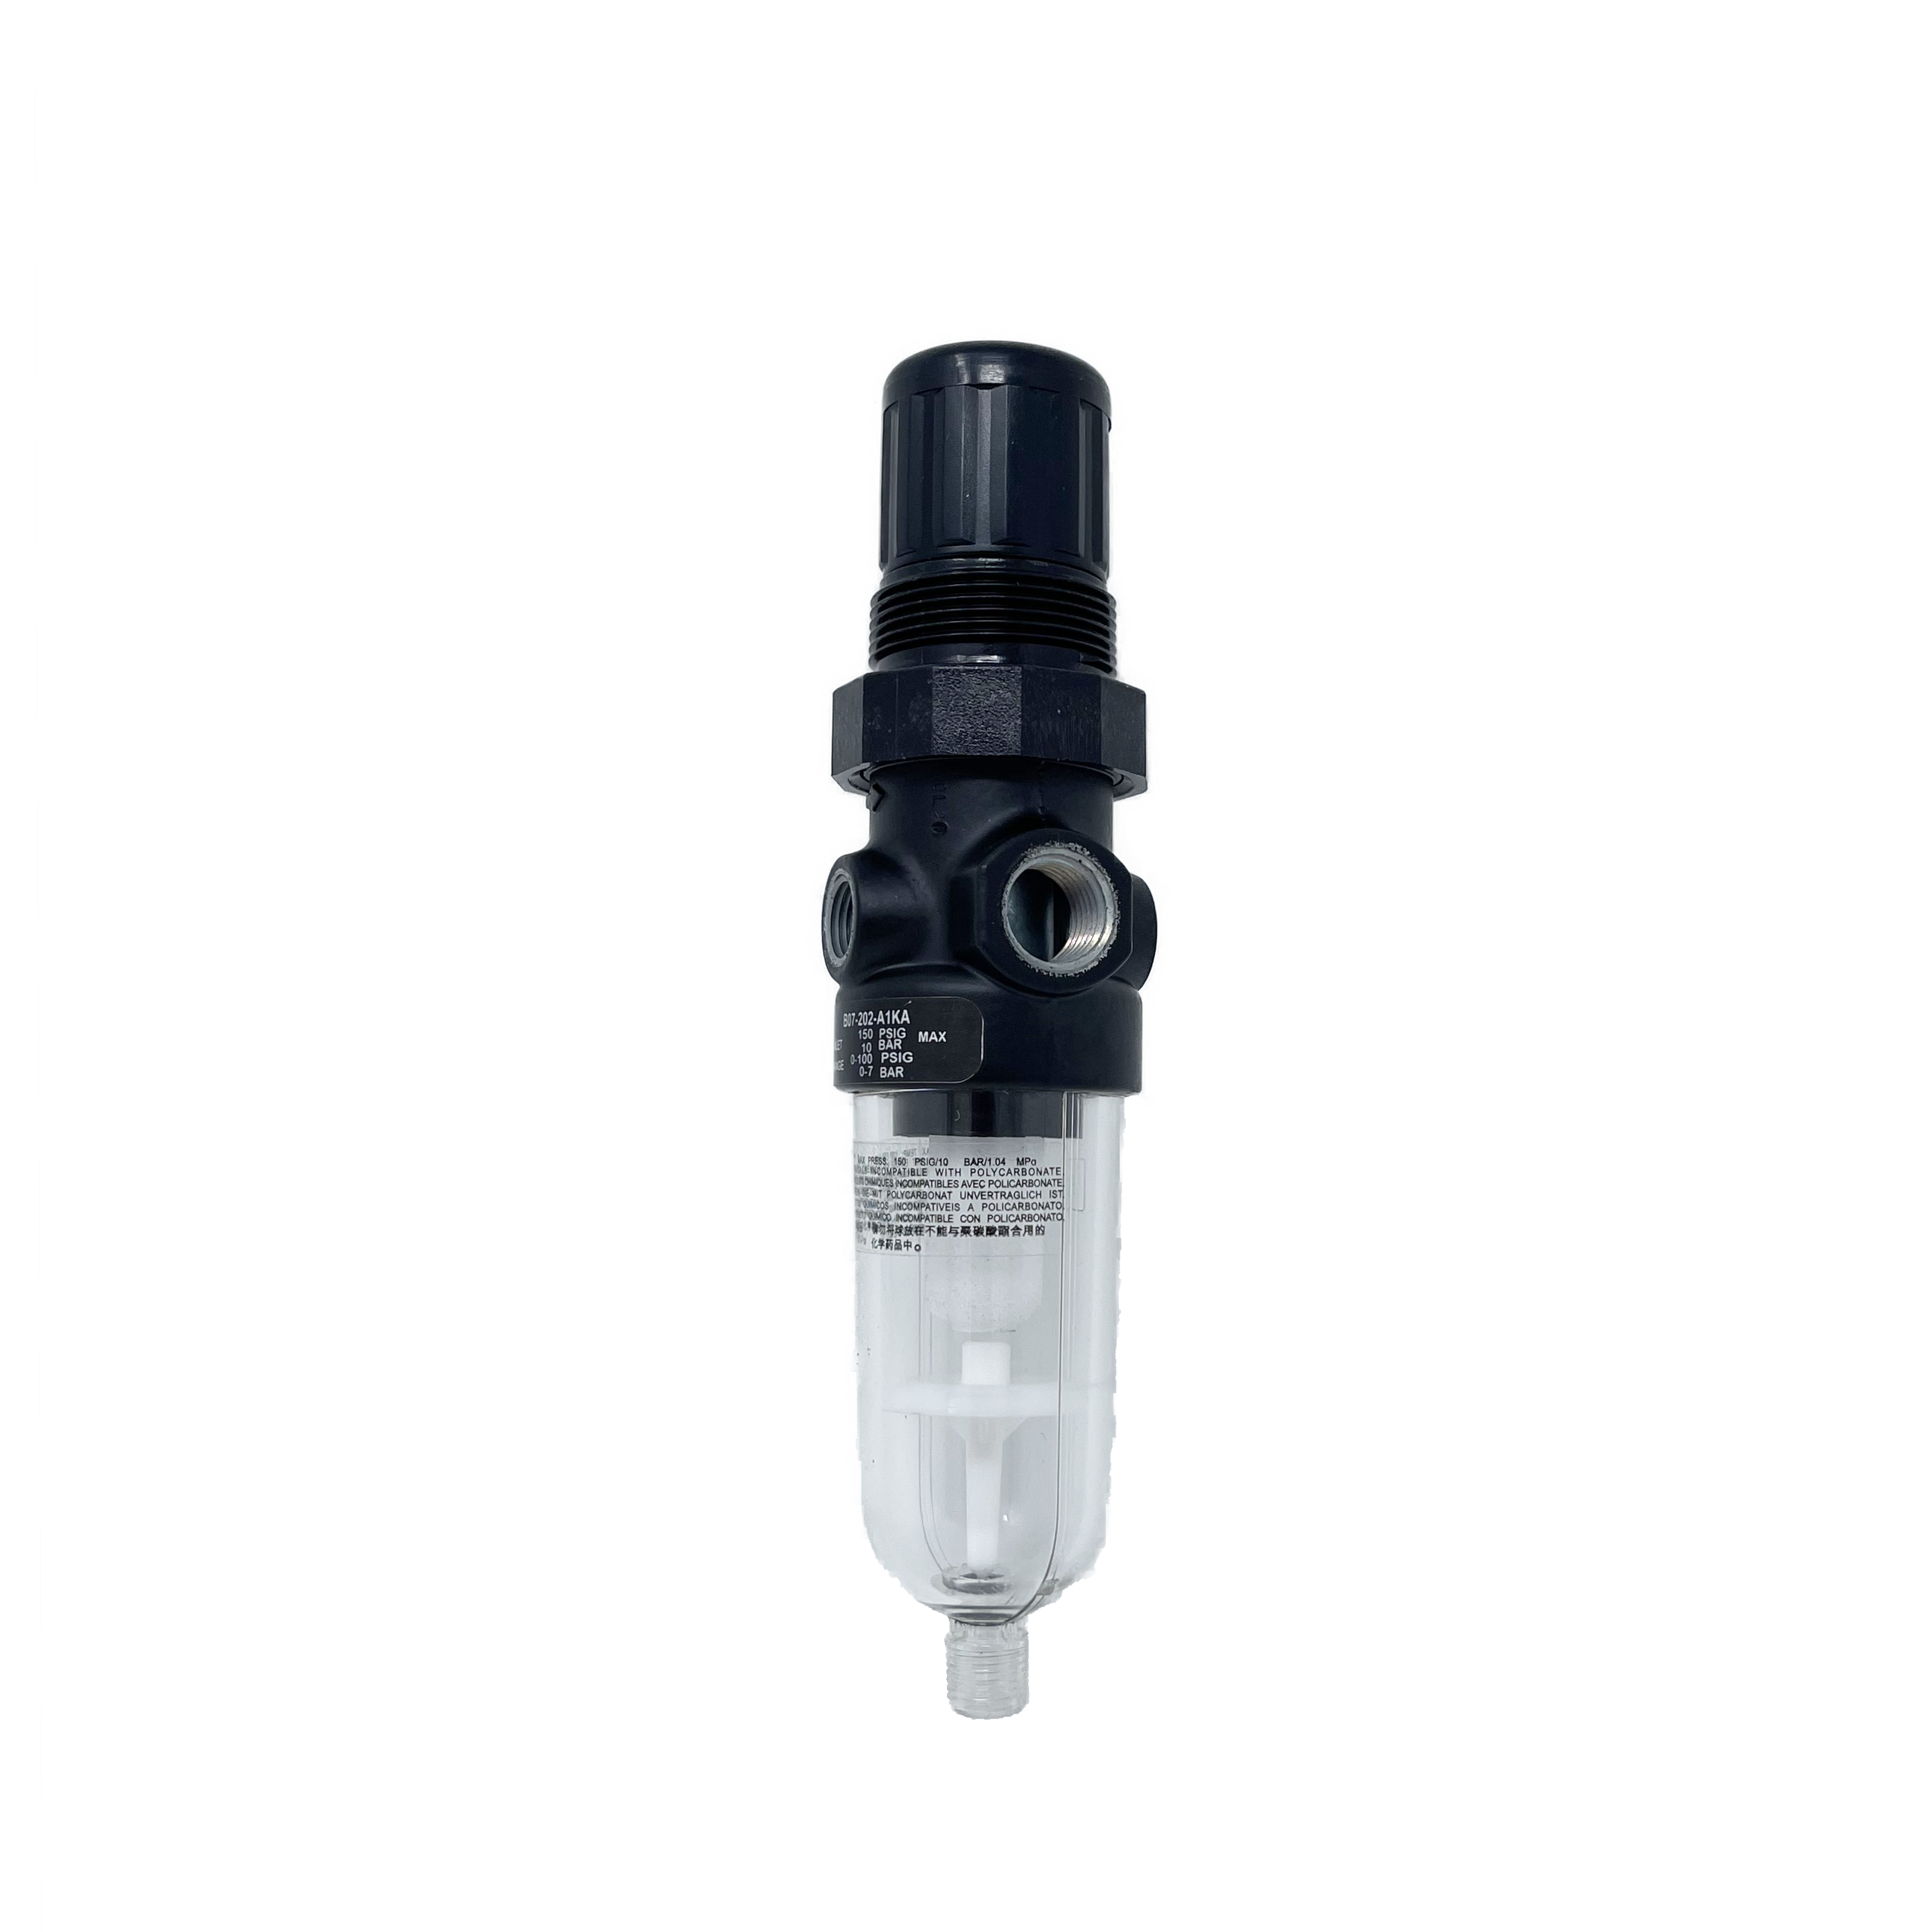 B07-201-A1KA : Norgren B07 miniature filter/regulator, Transparent Bowl, Relieving, Without Gauge, Automatic Drain, 5-Micron, 5